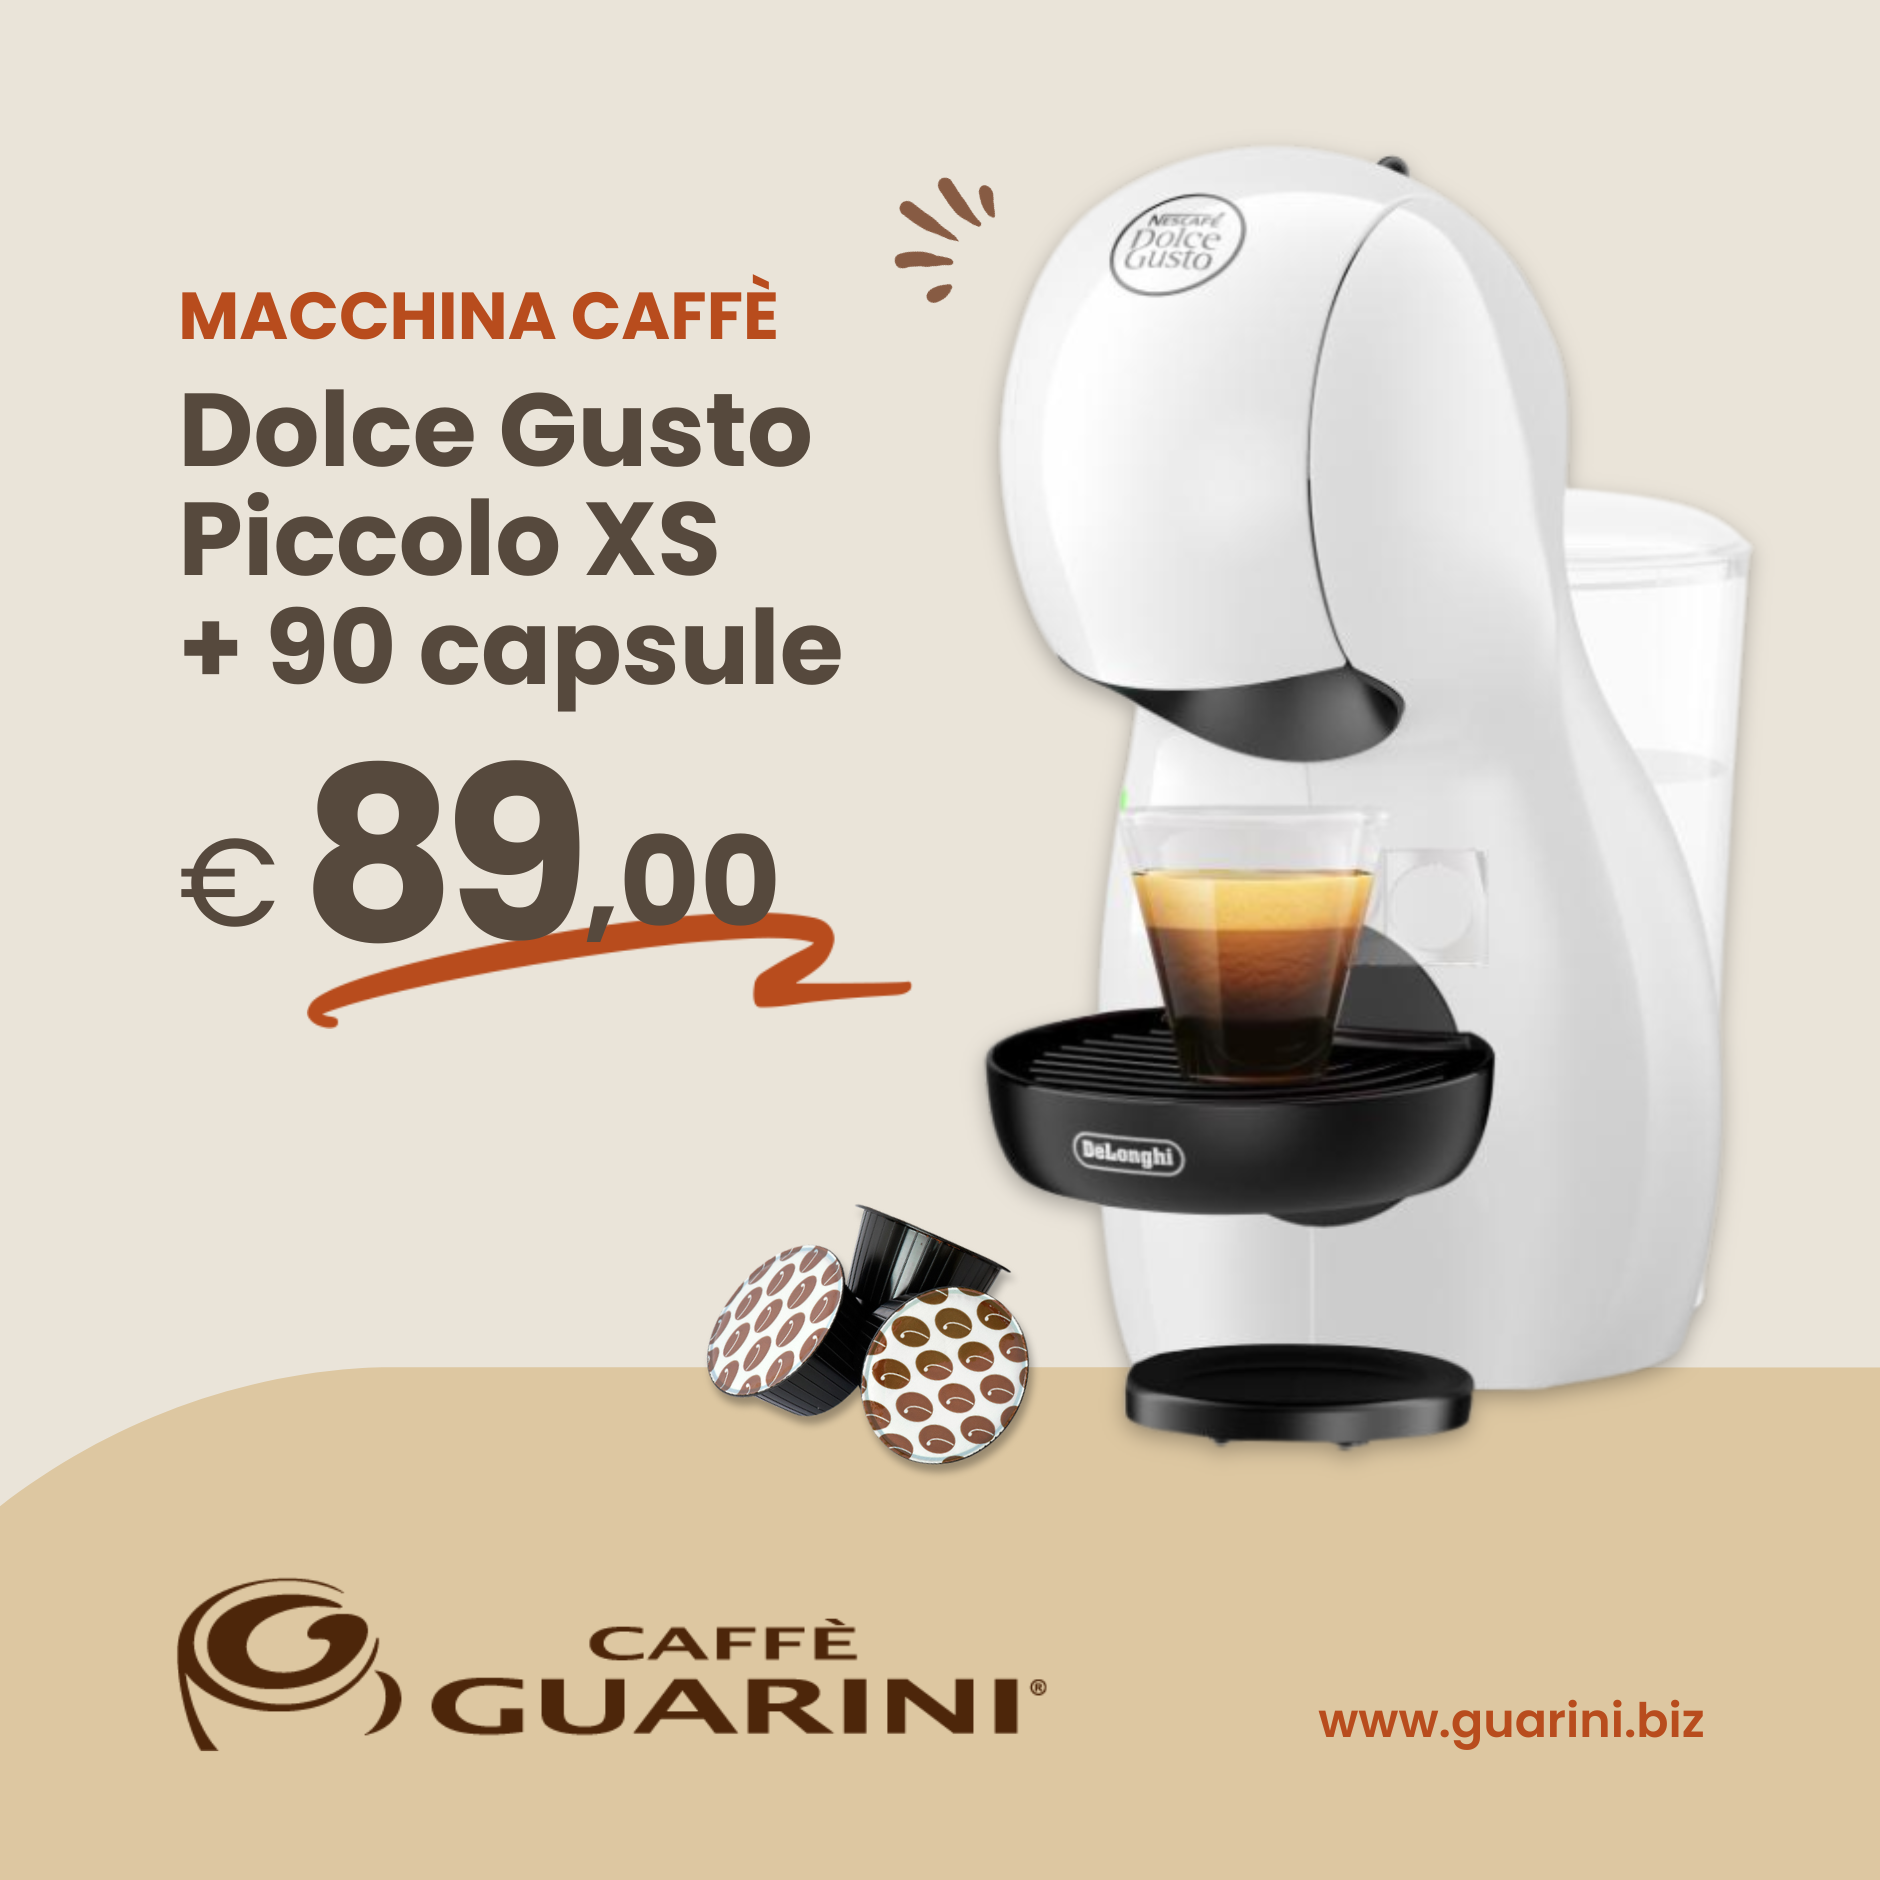 Macchina da caffè Dolce Gusto e capsule Guarini